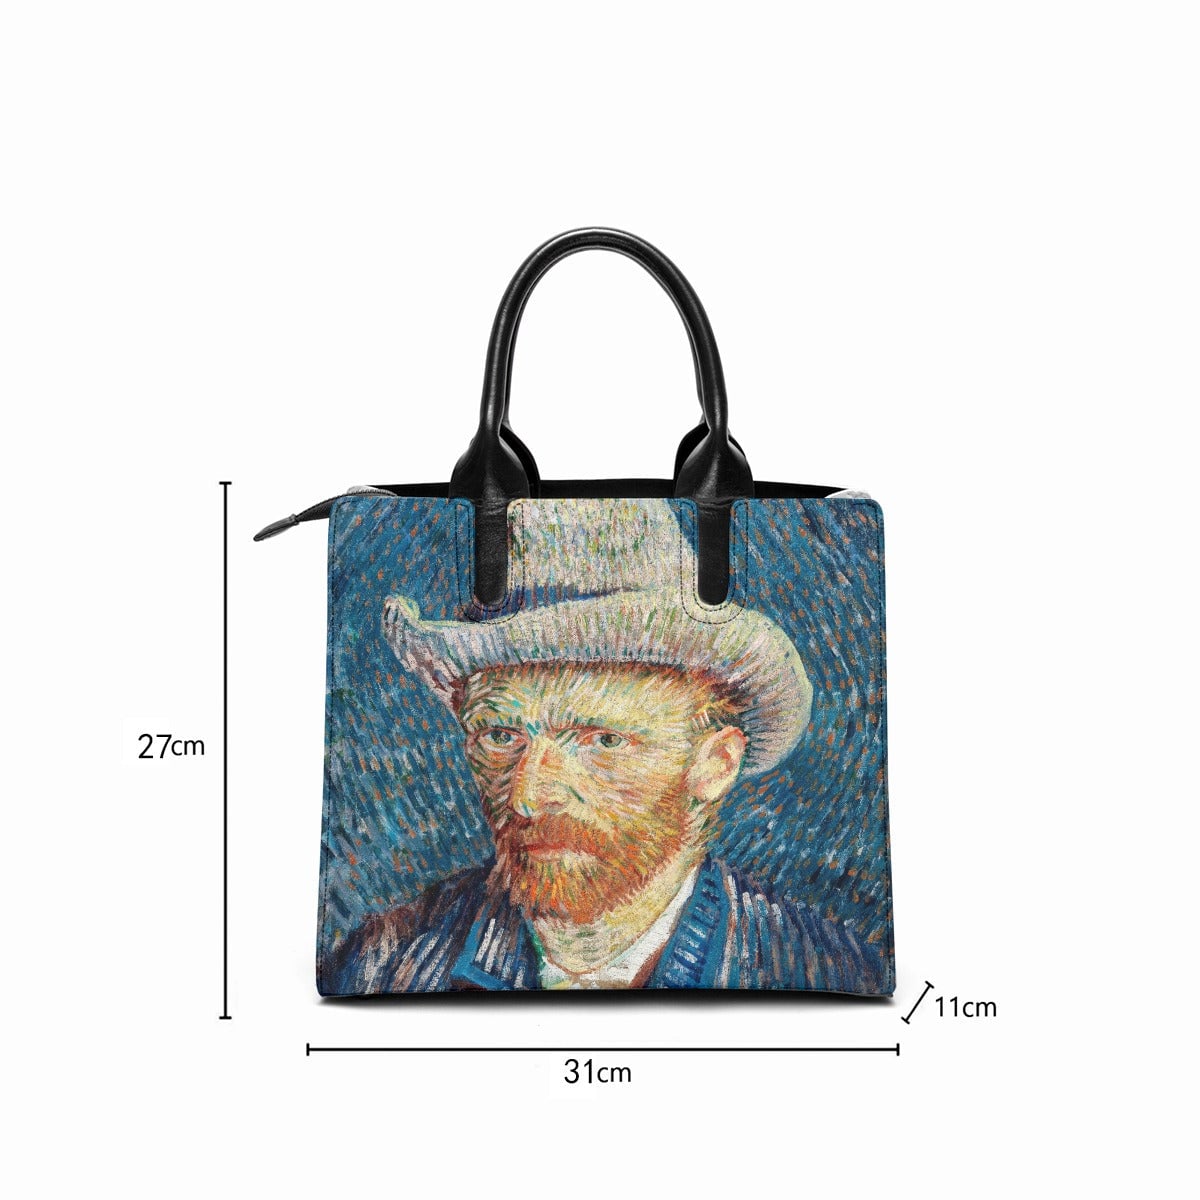 Self-Portrait with Grey Felt Hat Van Gogh Handbag